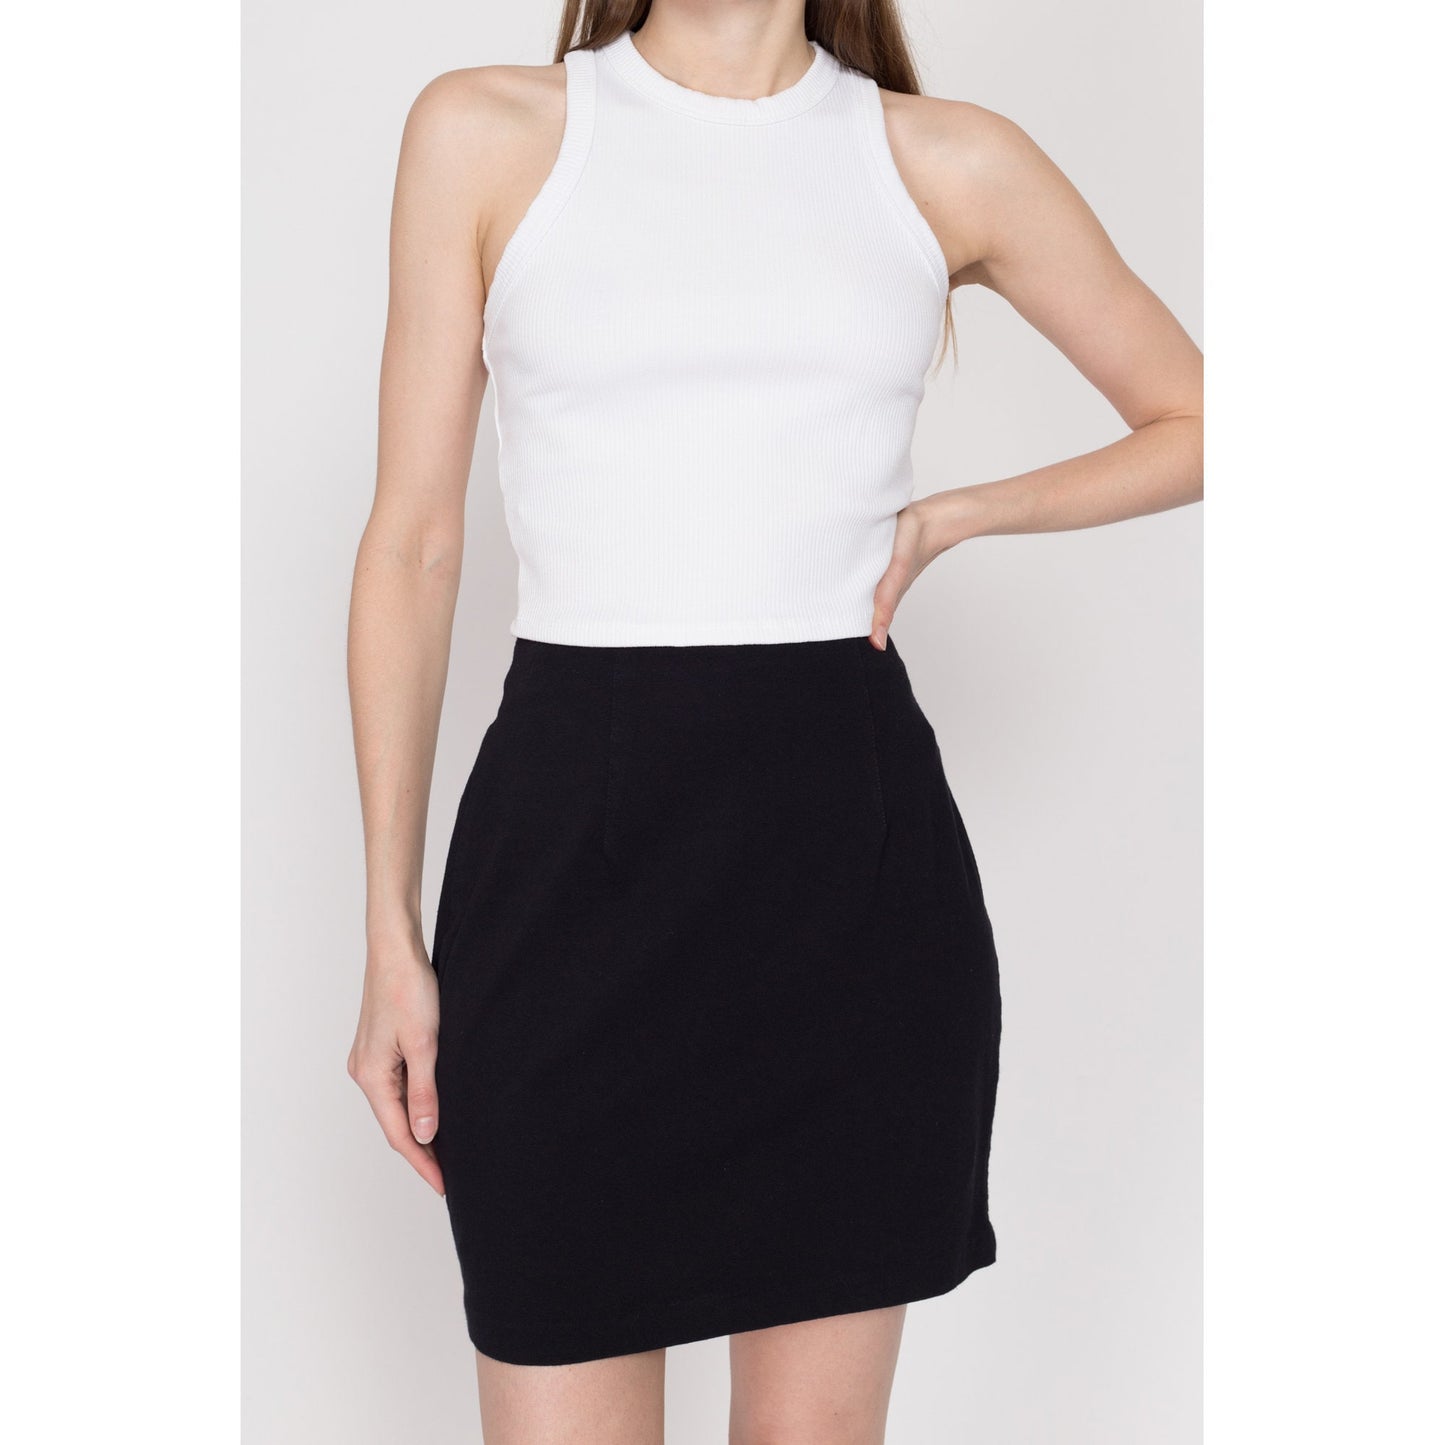 Sm-Med 90s Black Stretchy Fitted Mini Skirt | Vintage Minimalist Elastic High Waisted Plain Pencil Miniskirt